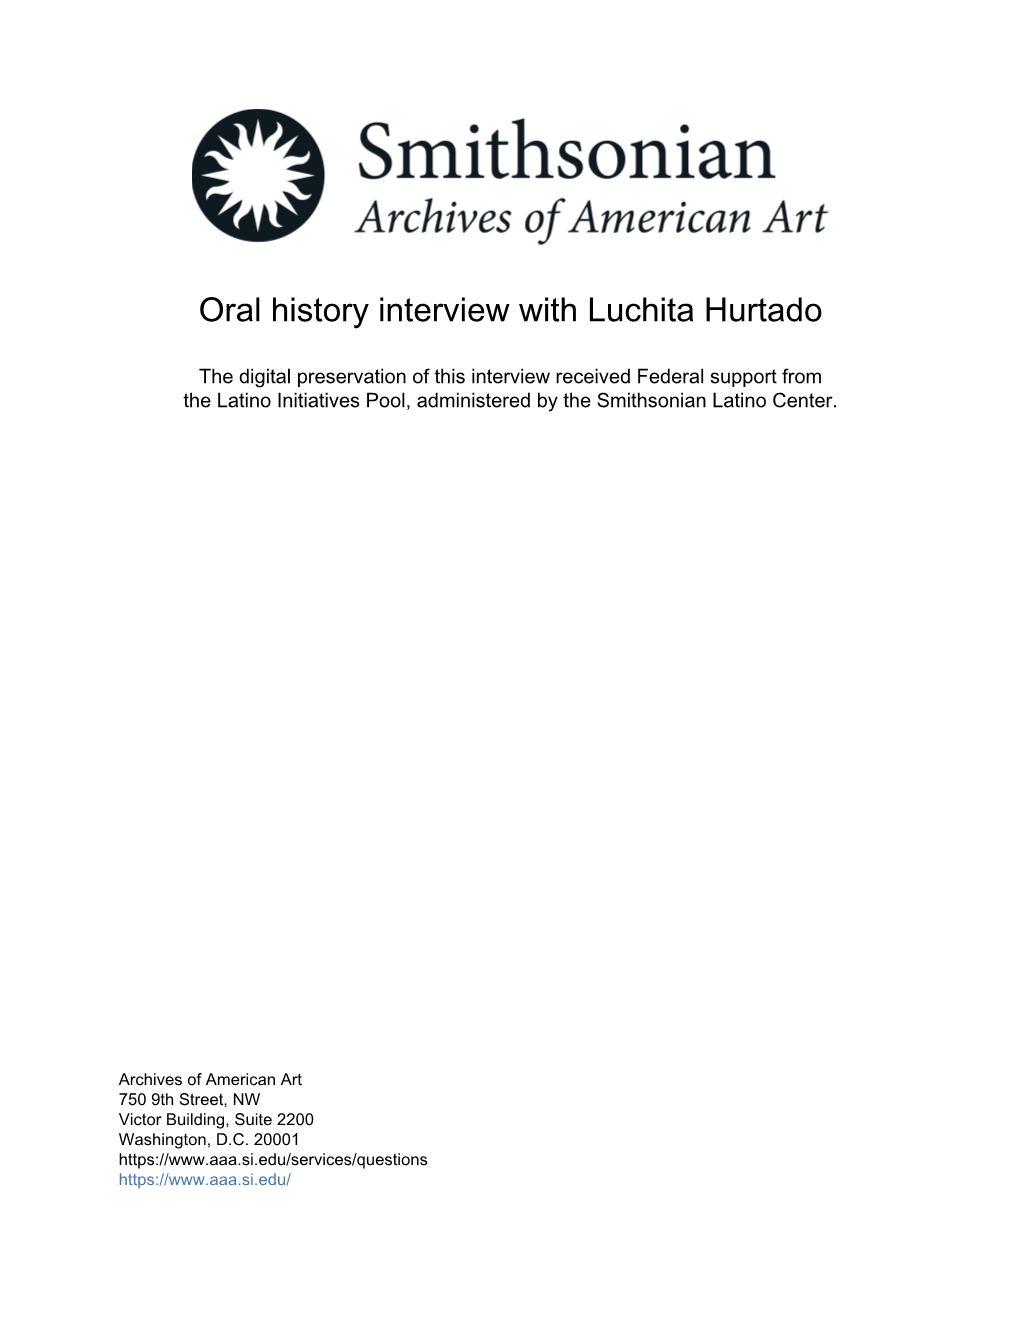 Oral History Interview with Luchita Hurtado